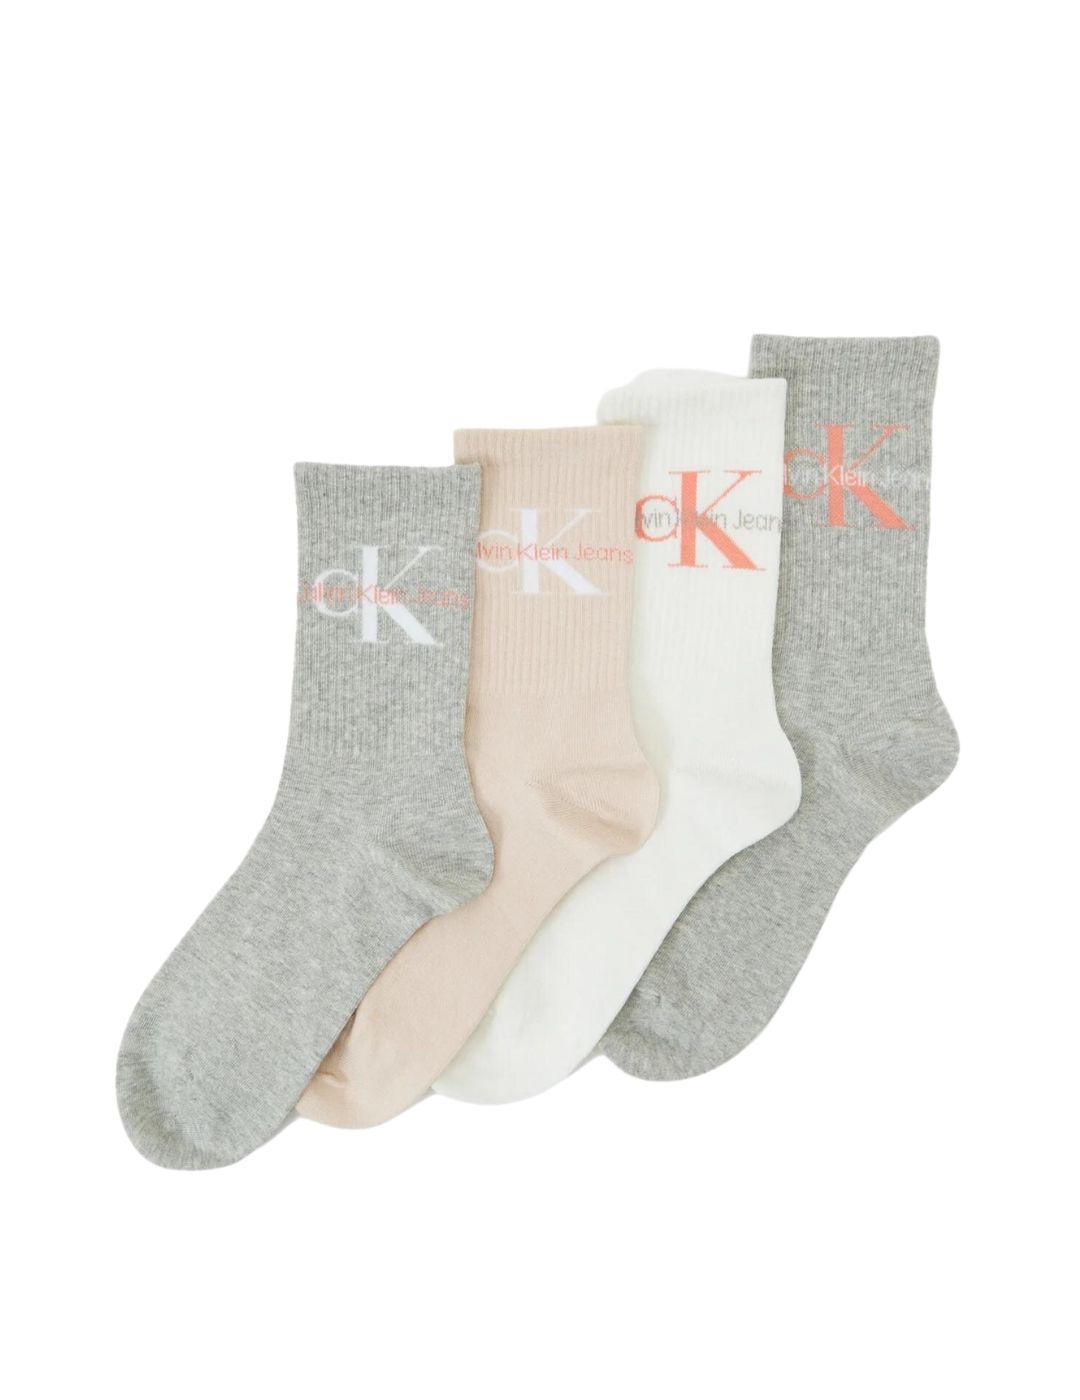 Pack de 4 calcetines Calvin Klein con logotipo Ck para mujer